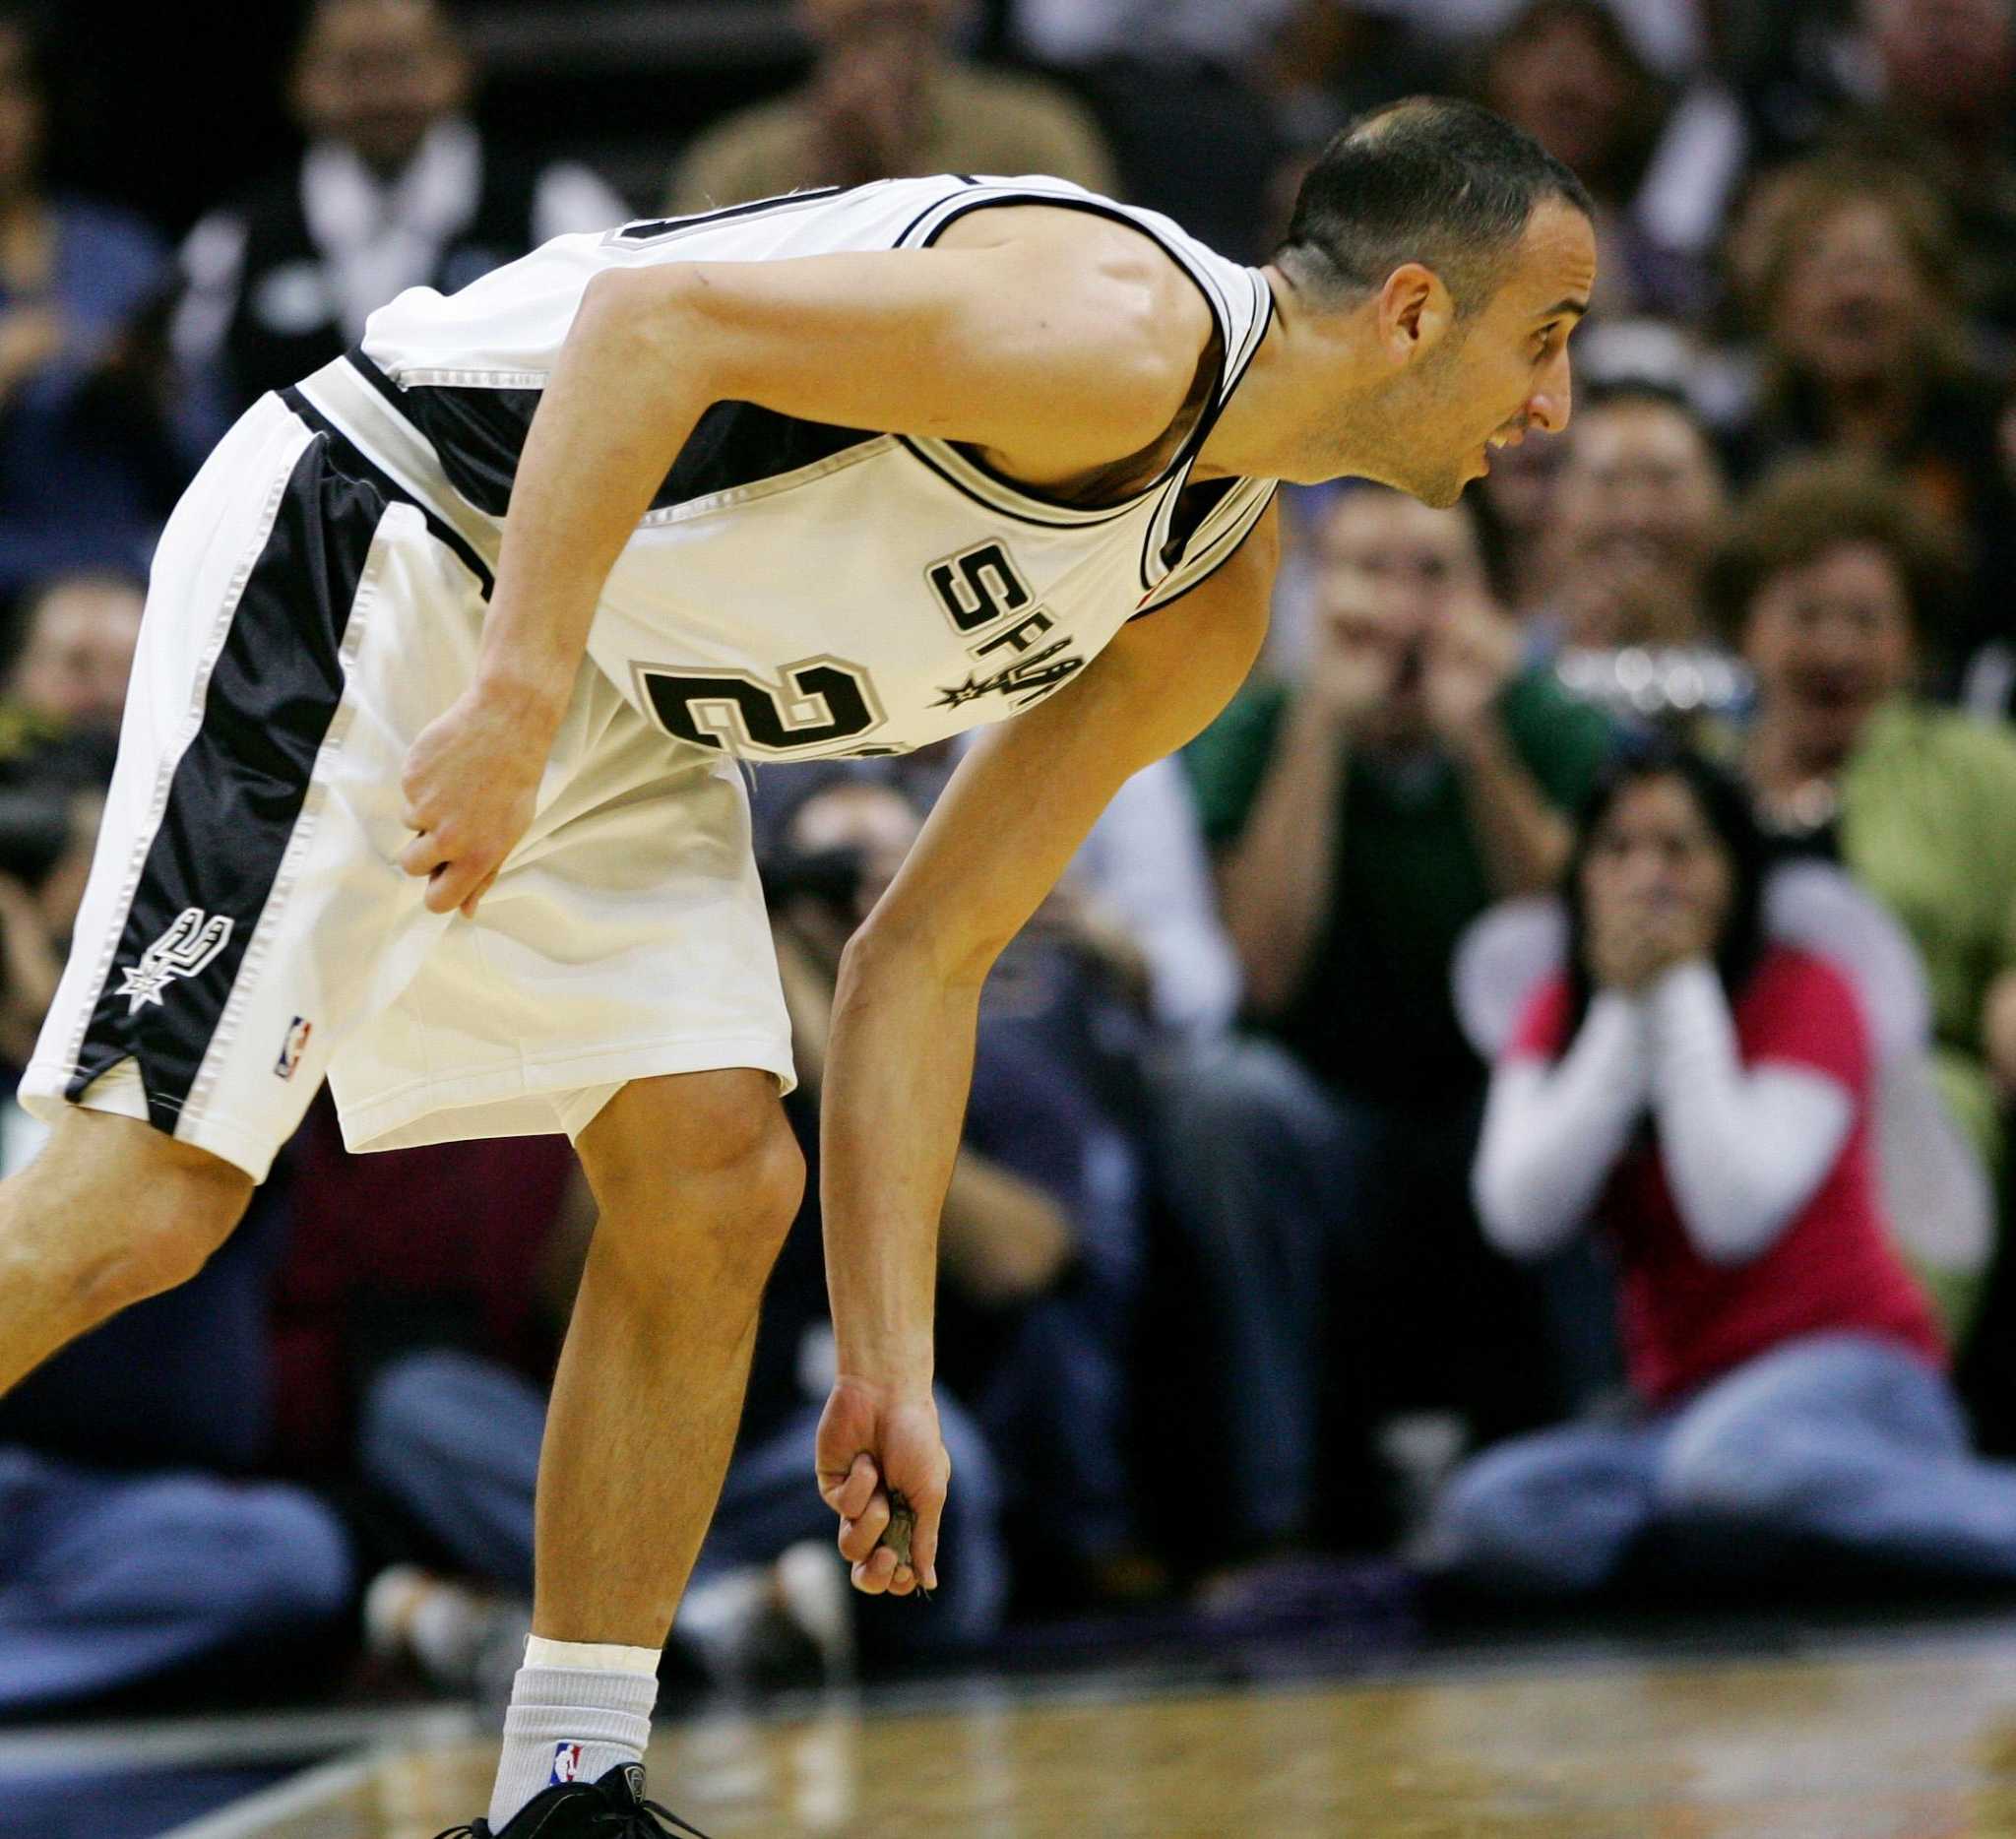 Top 10 Spurs moments: No. 7 — Manu Ginobili snuffs James Harden